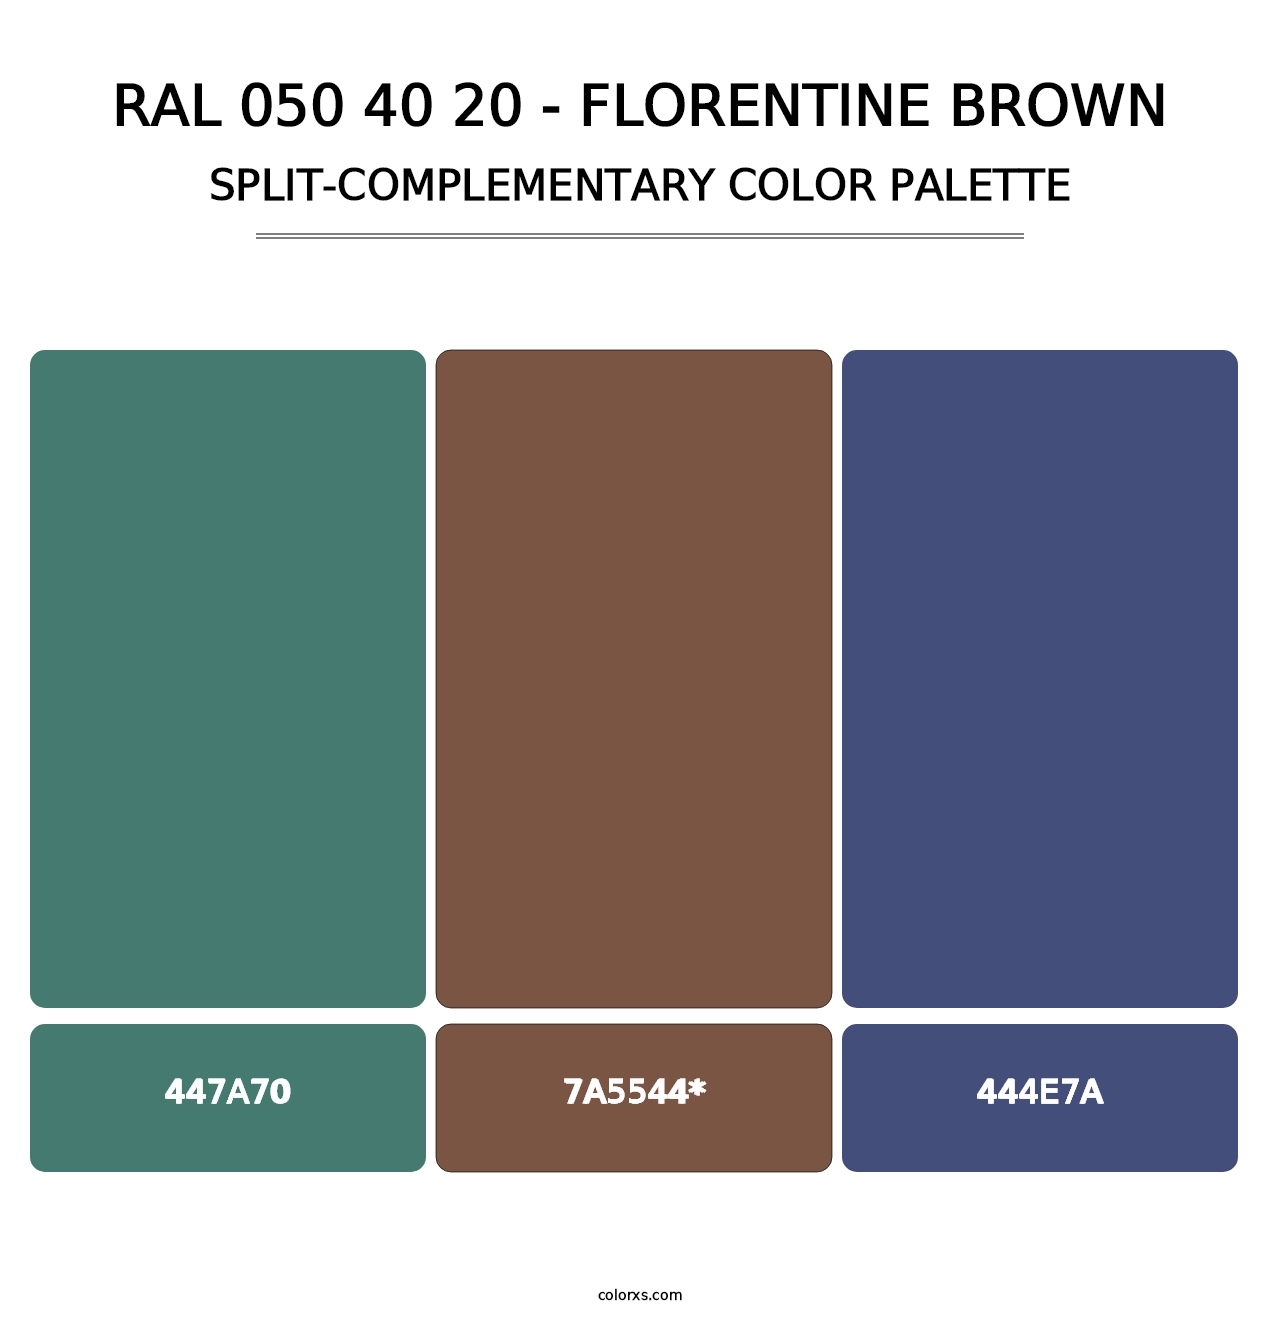 RAL 050 40 20 - Florentine Brown - Split-Complementary Color Palette